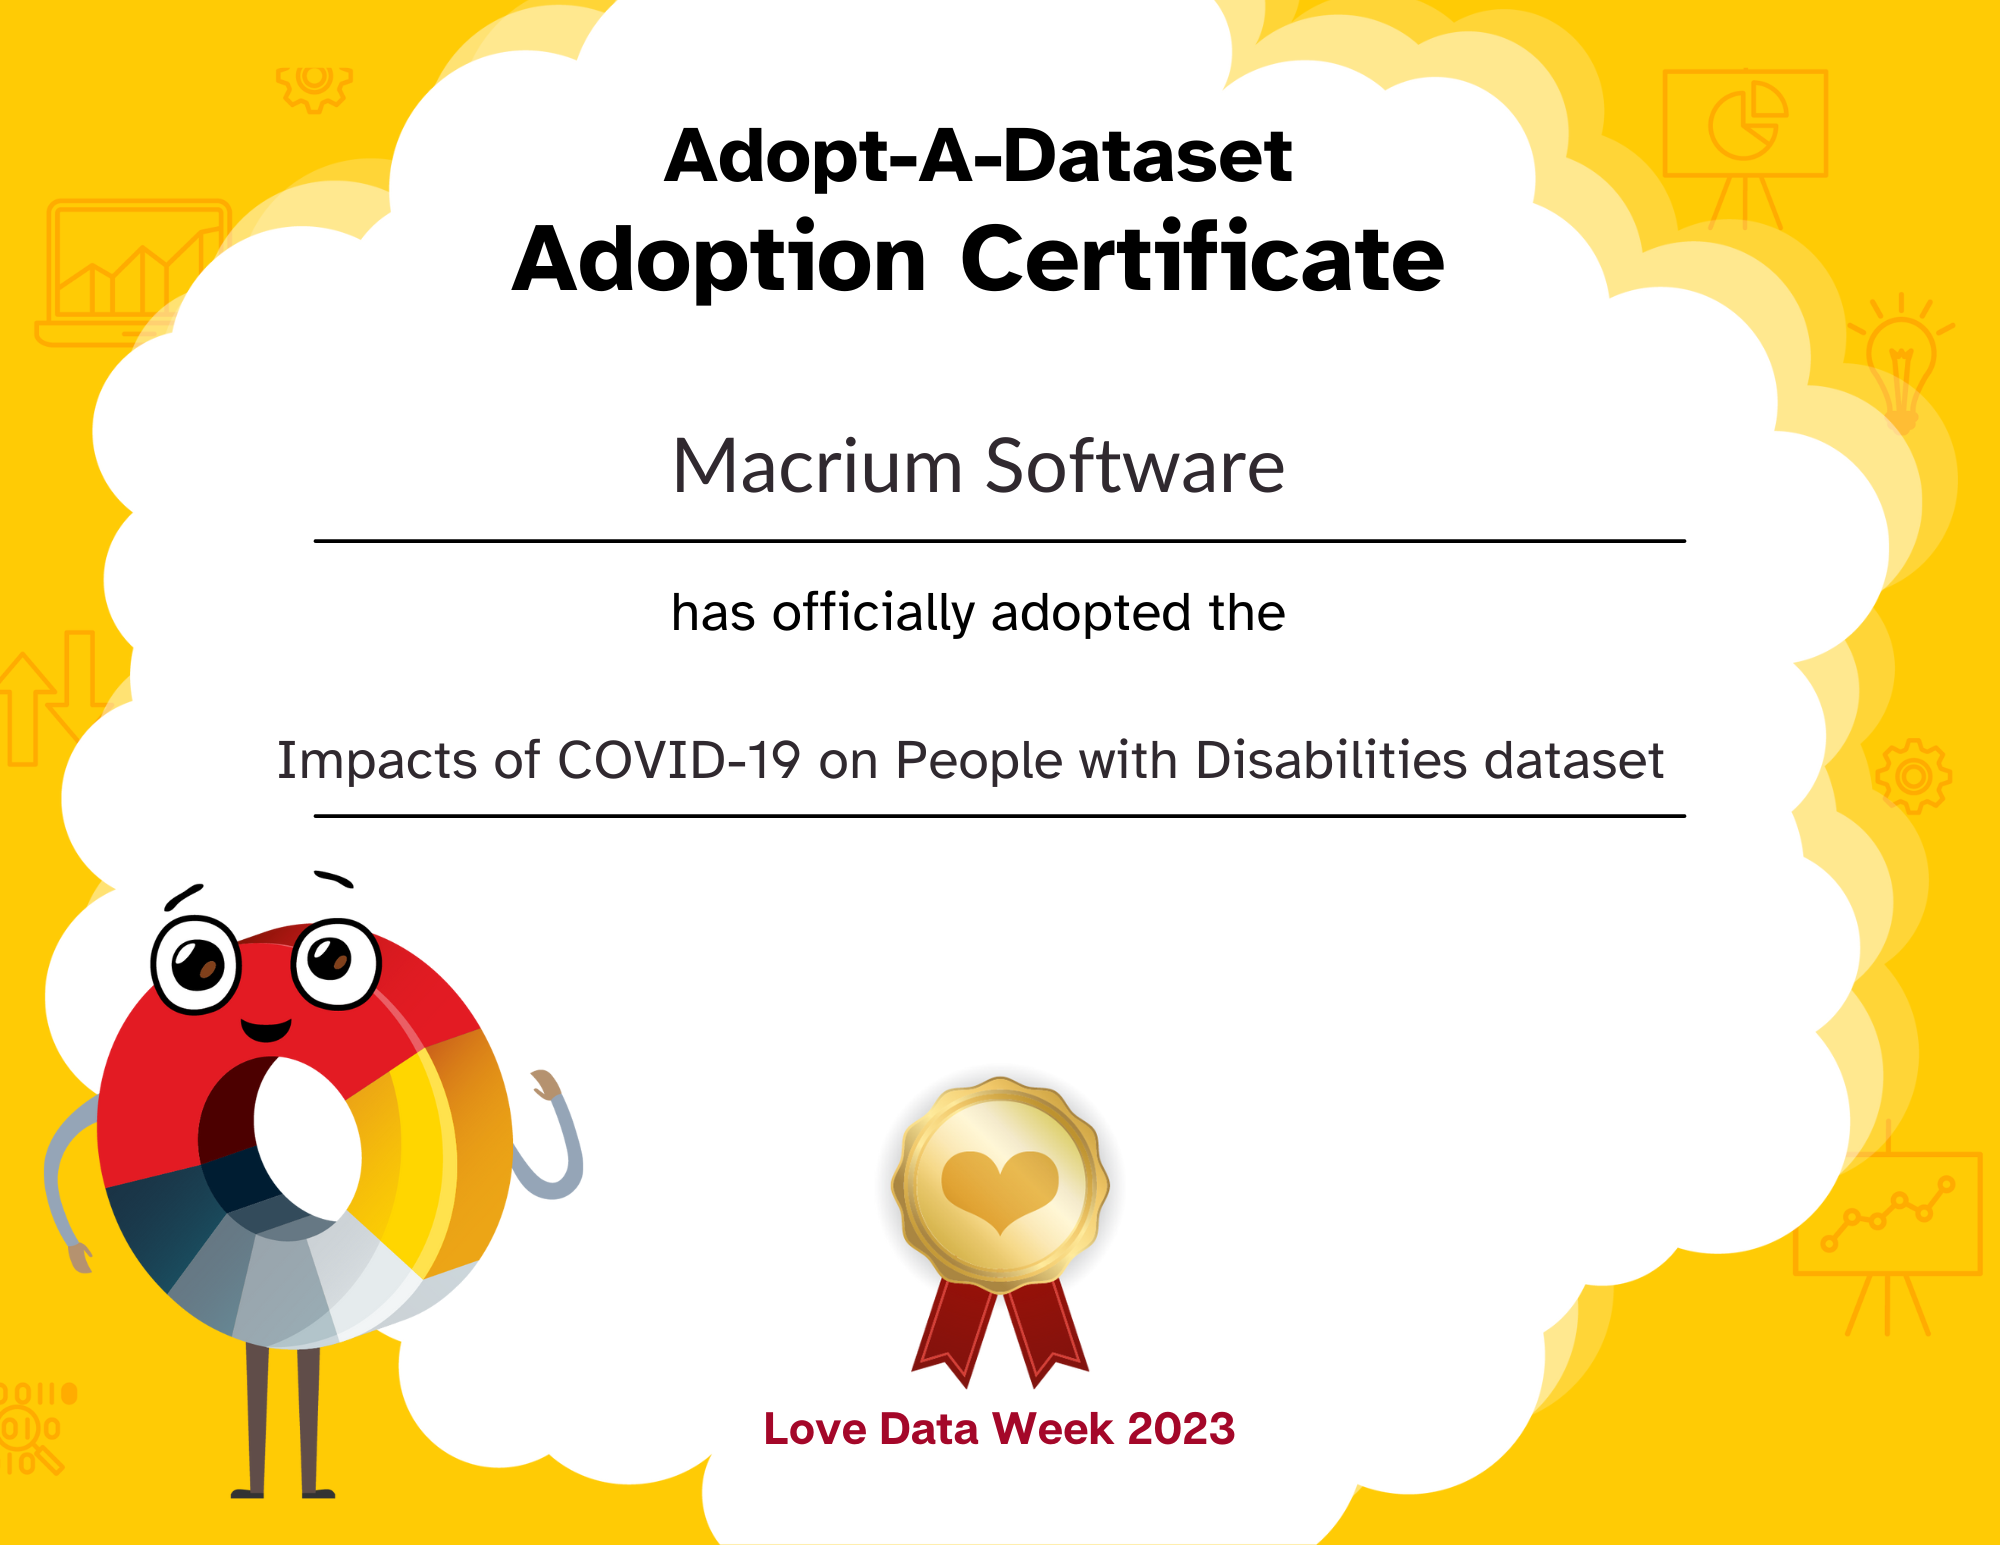 Macrium Software Adoption Certificate LoveDataWeek23